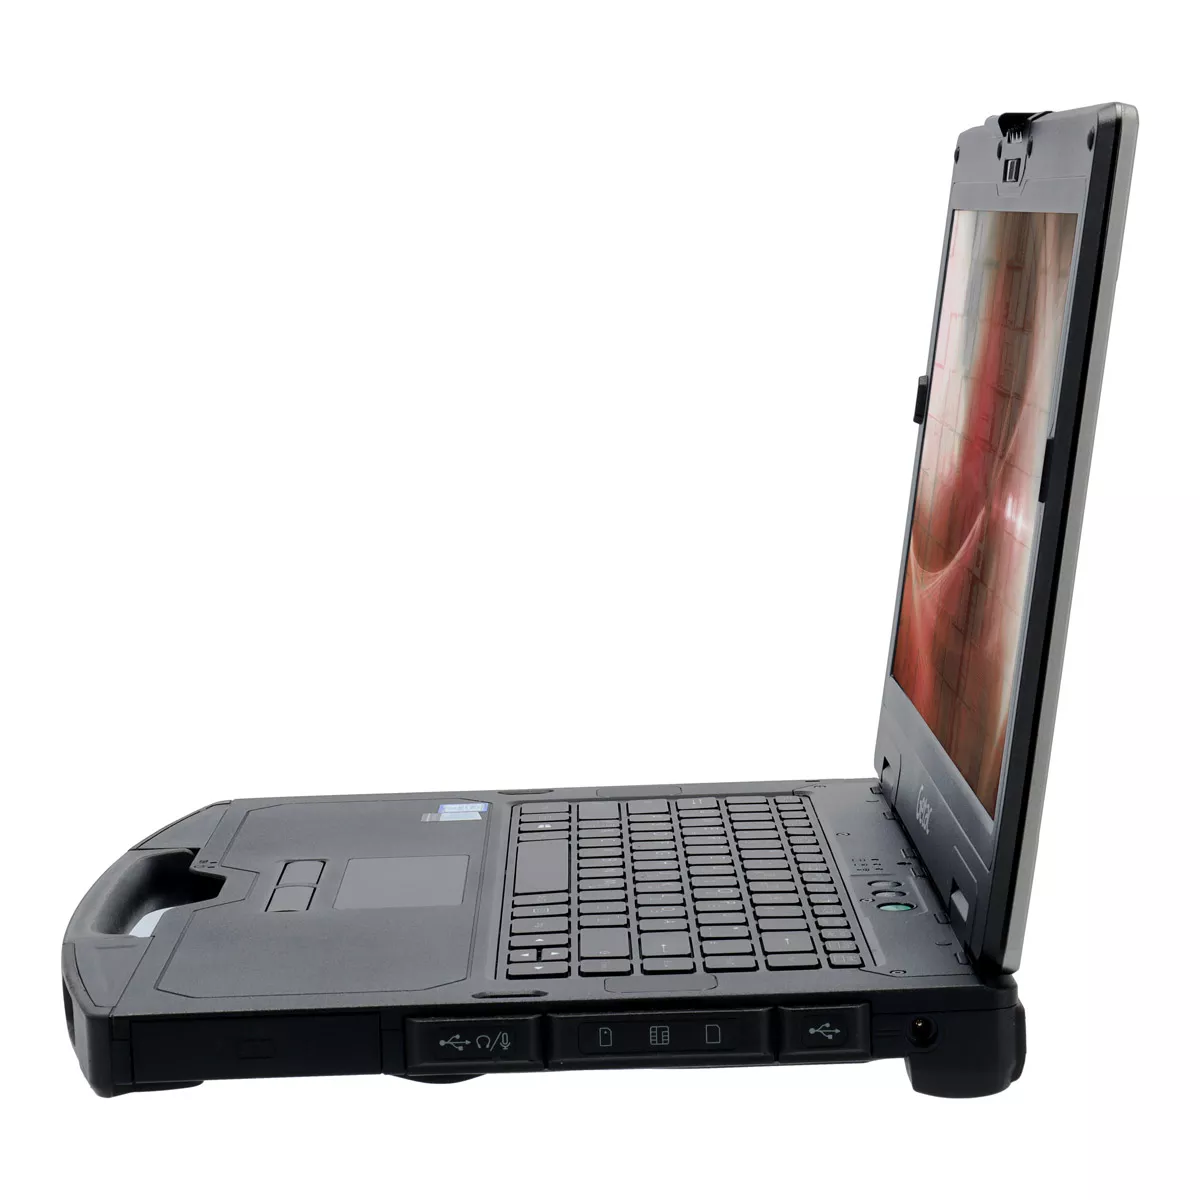 Outdoor Notebook Getac S410 Core i5 6300U Full-HD 500 GB SSD Webcam